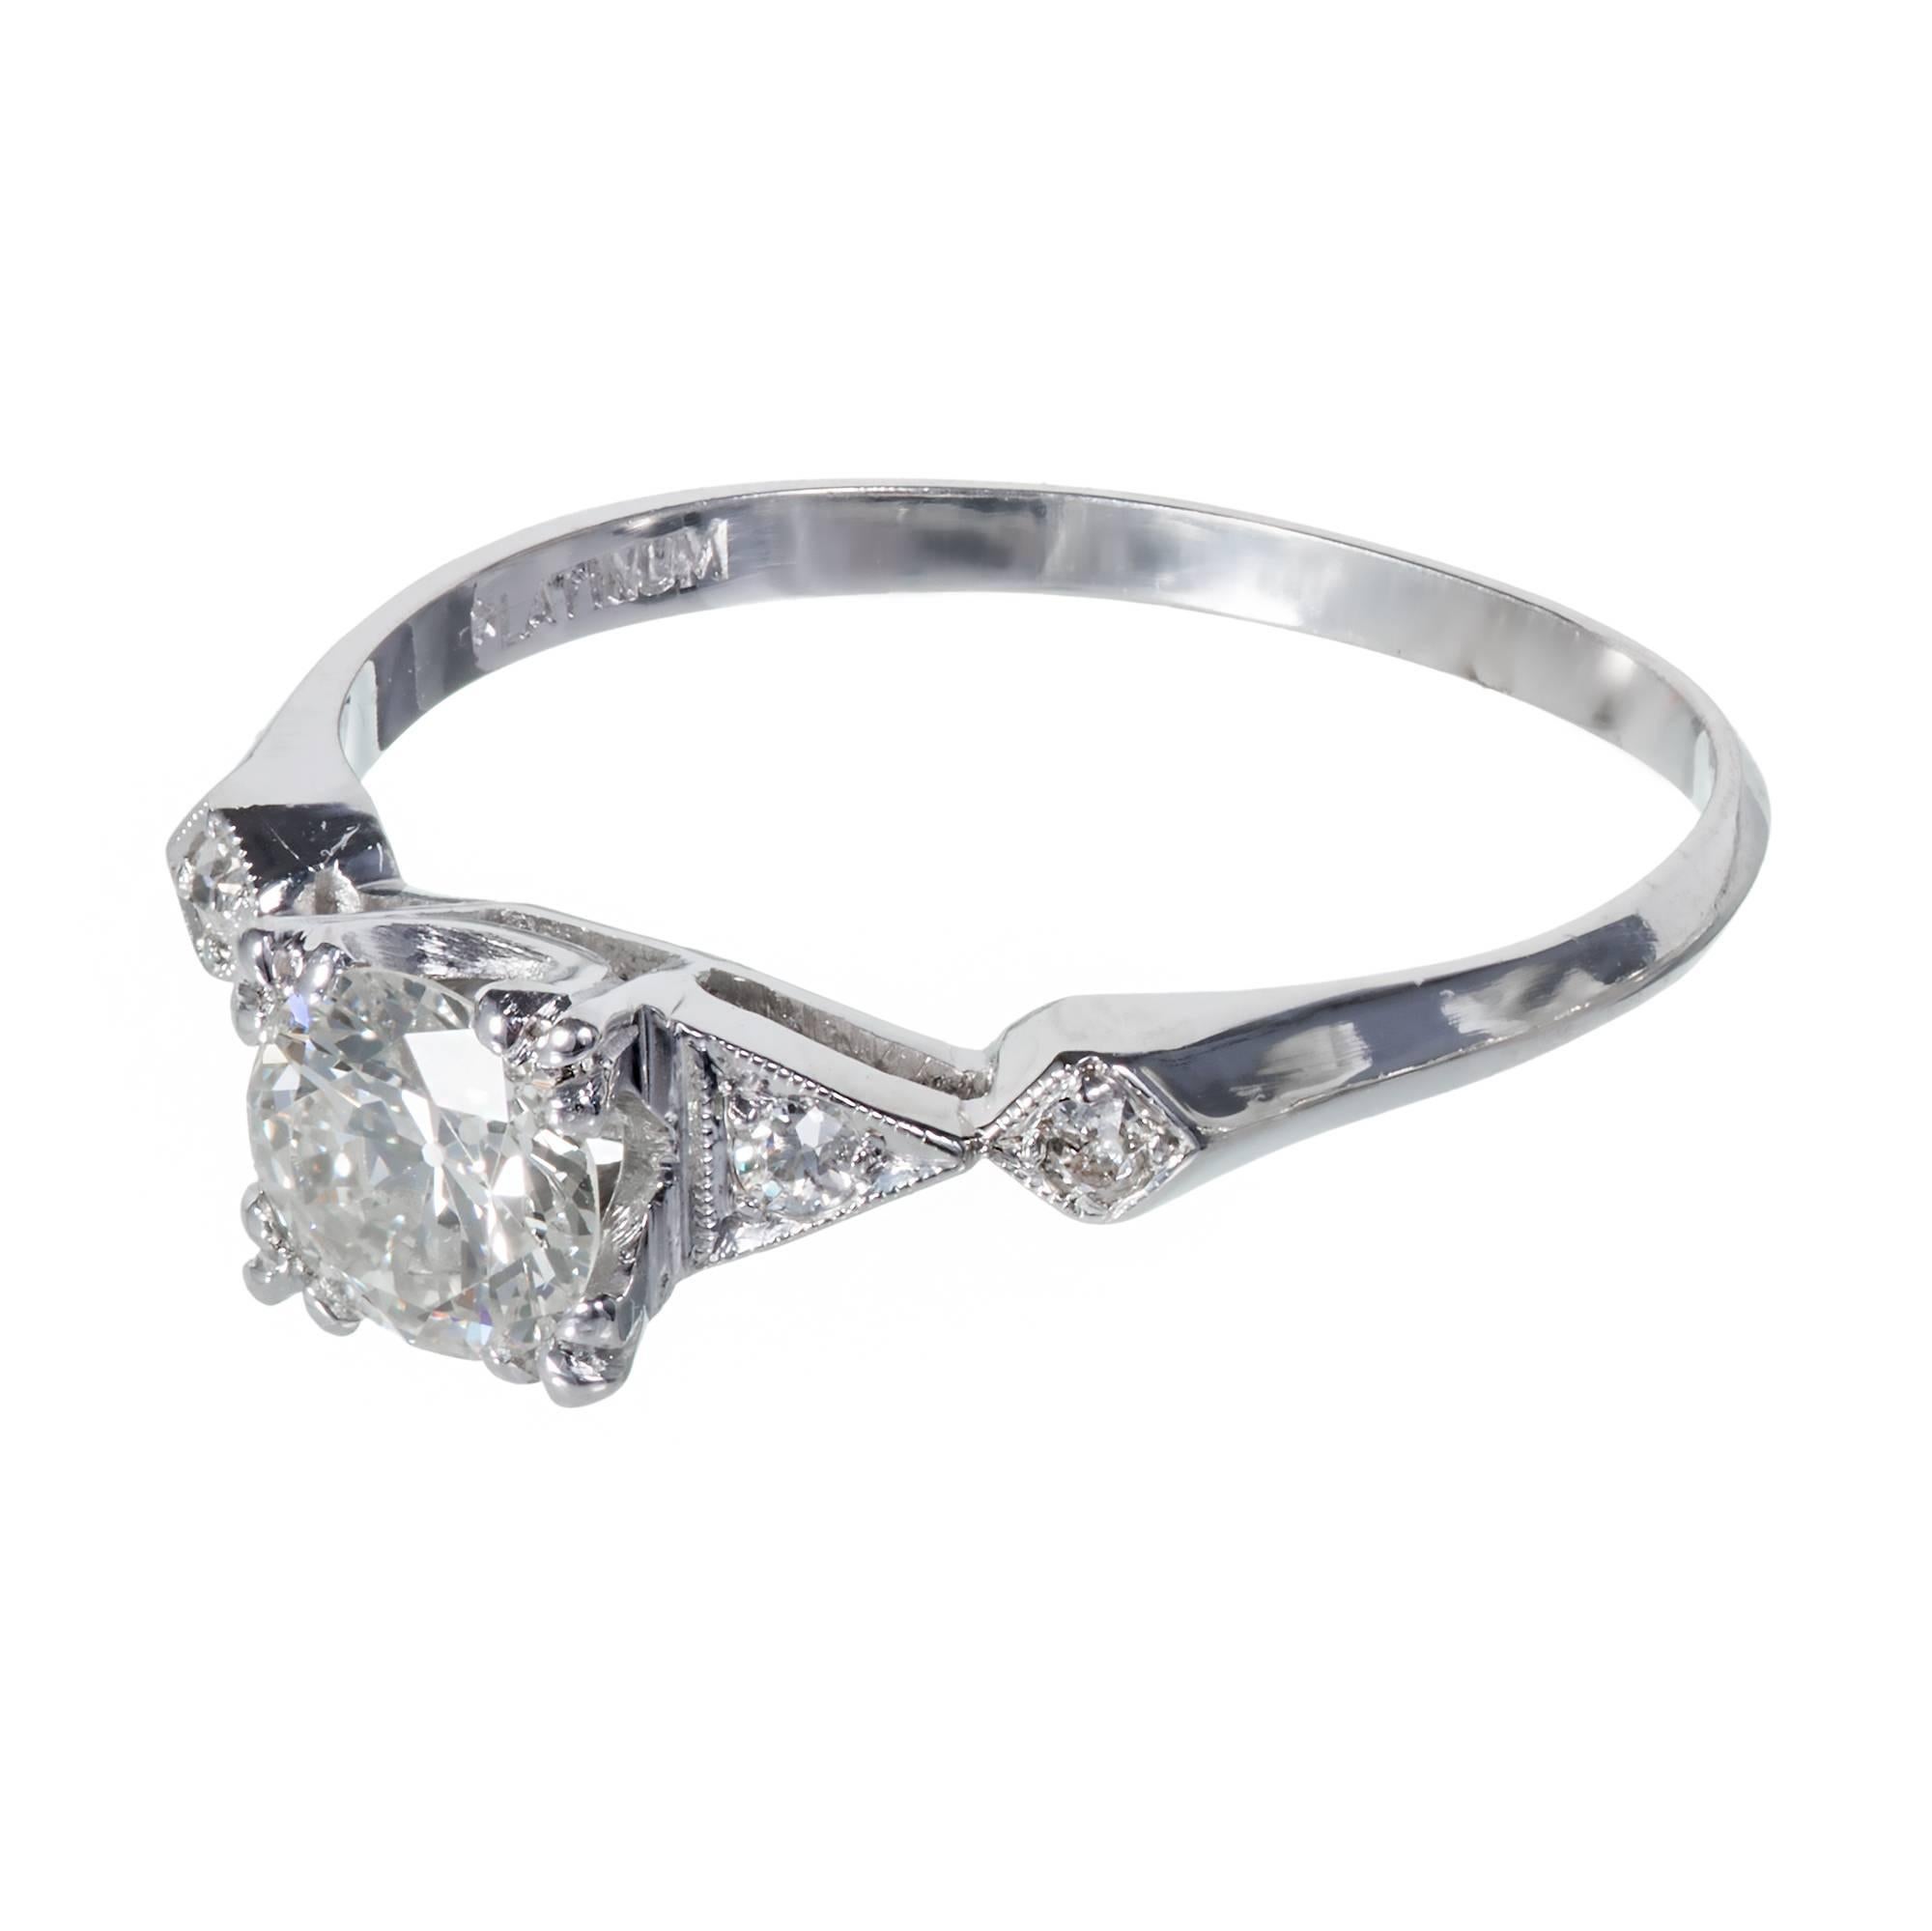 Original platinum diamond engagement ring with diamond side stones in its original platinum setting. Circa 1940.

1 Transitional Diamond J-K SII approximately .75 carats. EGL certificate # US 313785601D 
4 round diamonds H SII approximately .08